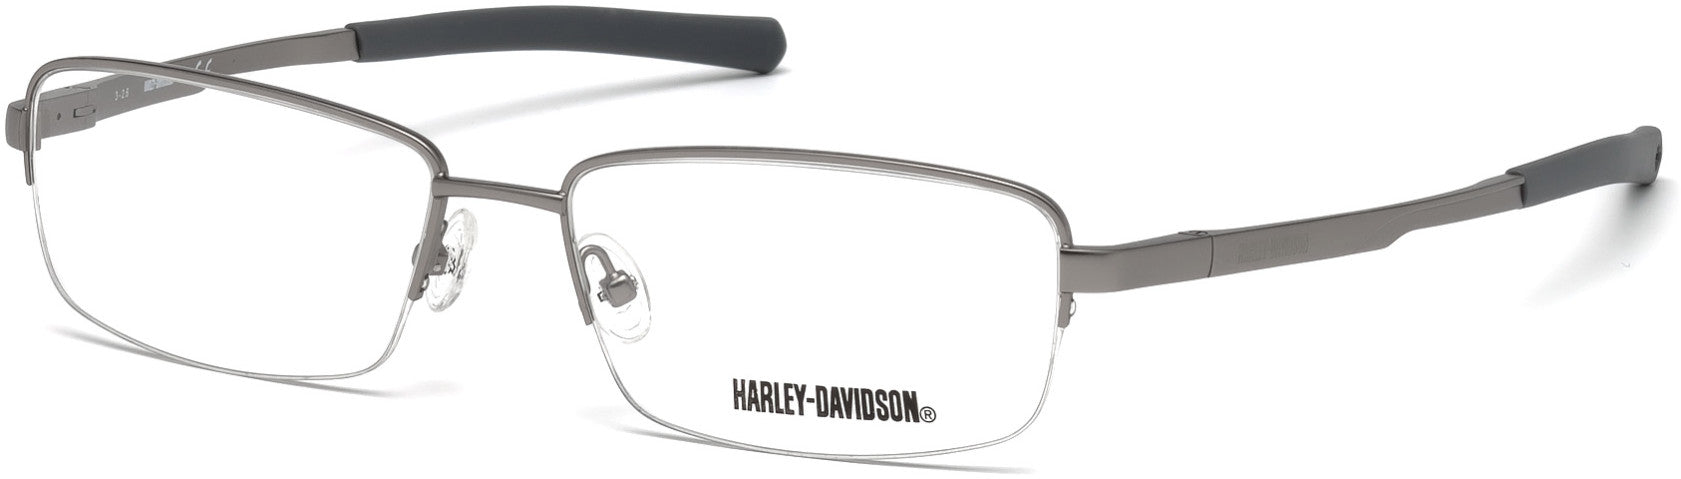 Harley-Davidson HD0755 Geometric Eyeglasses 009-009 - Matte Gunmetal